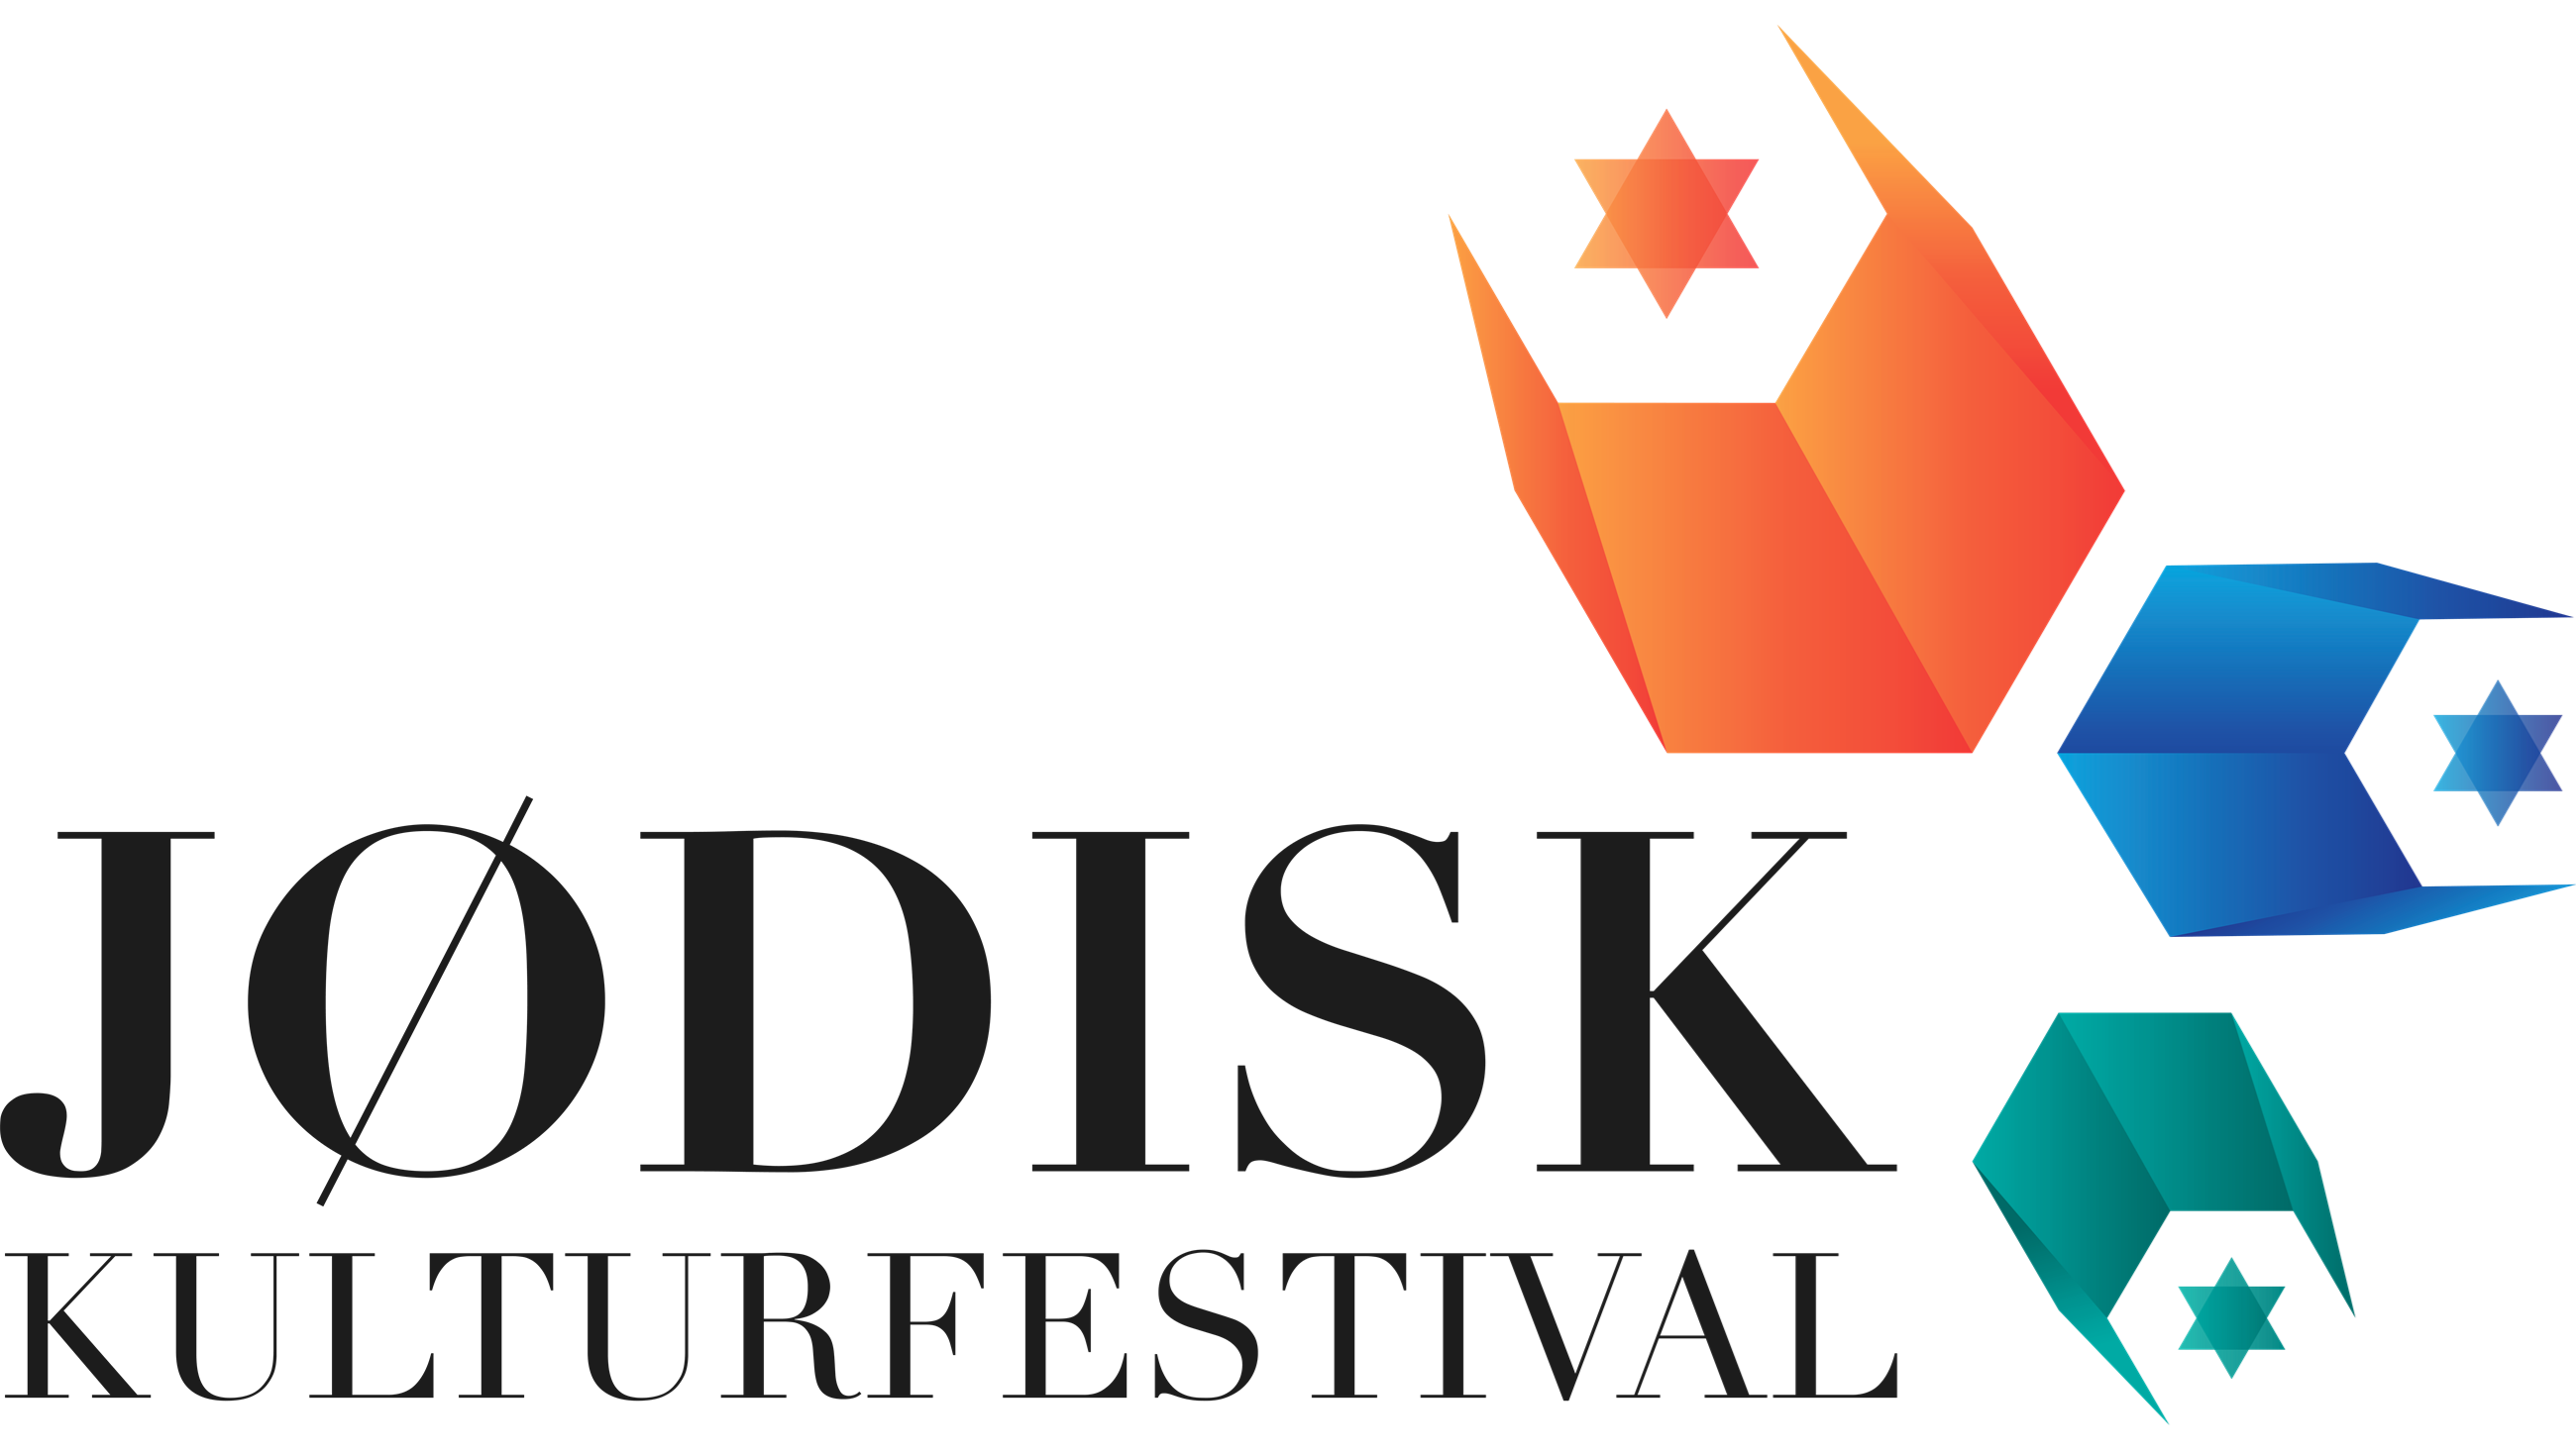 jødisk_kulturfestival_logo_rgb-kvadratisk-1